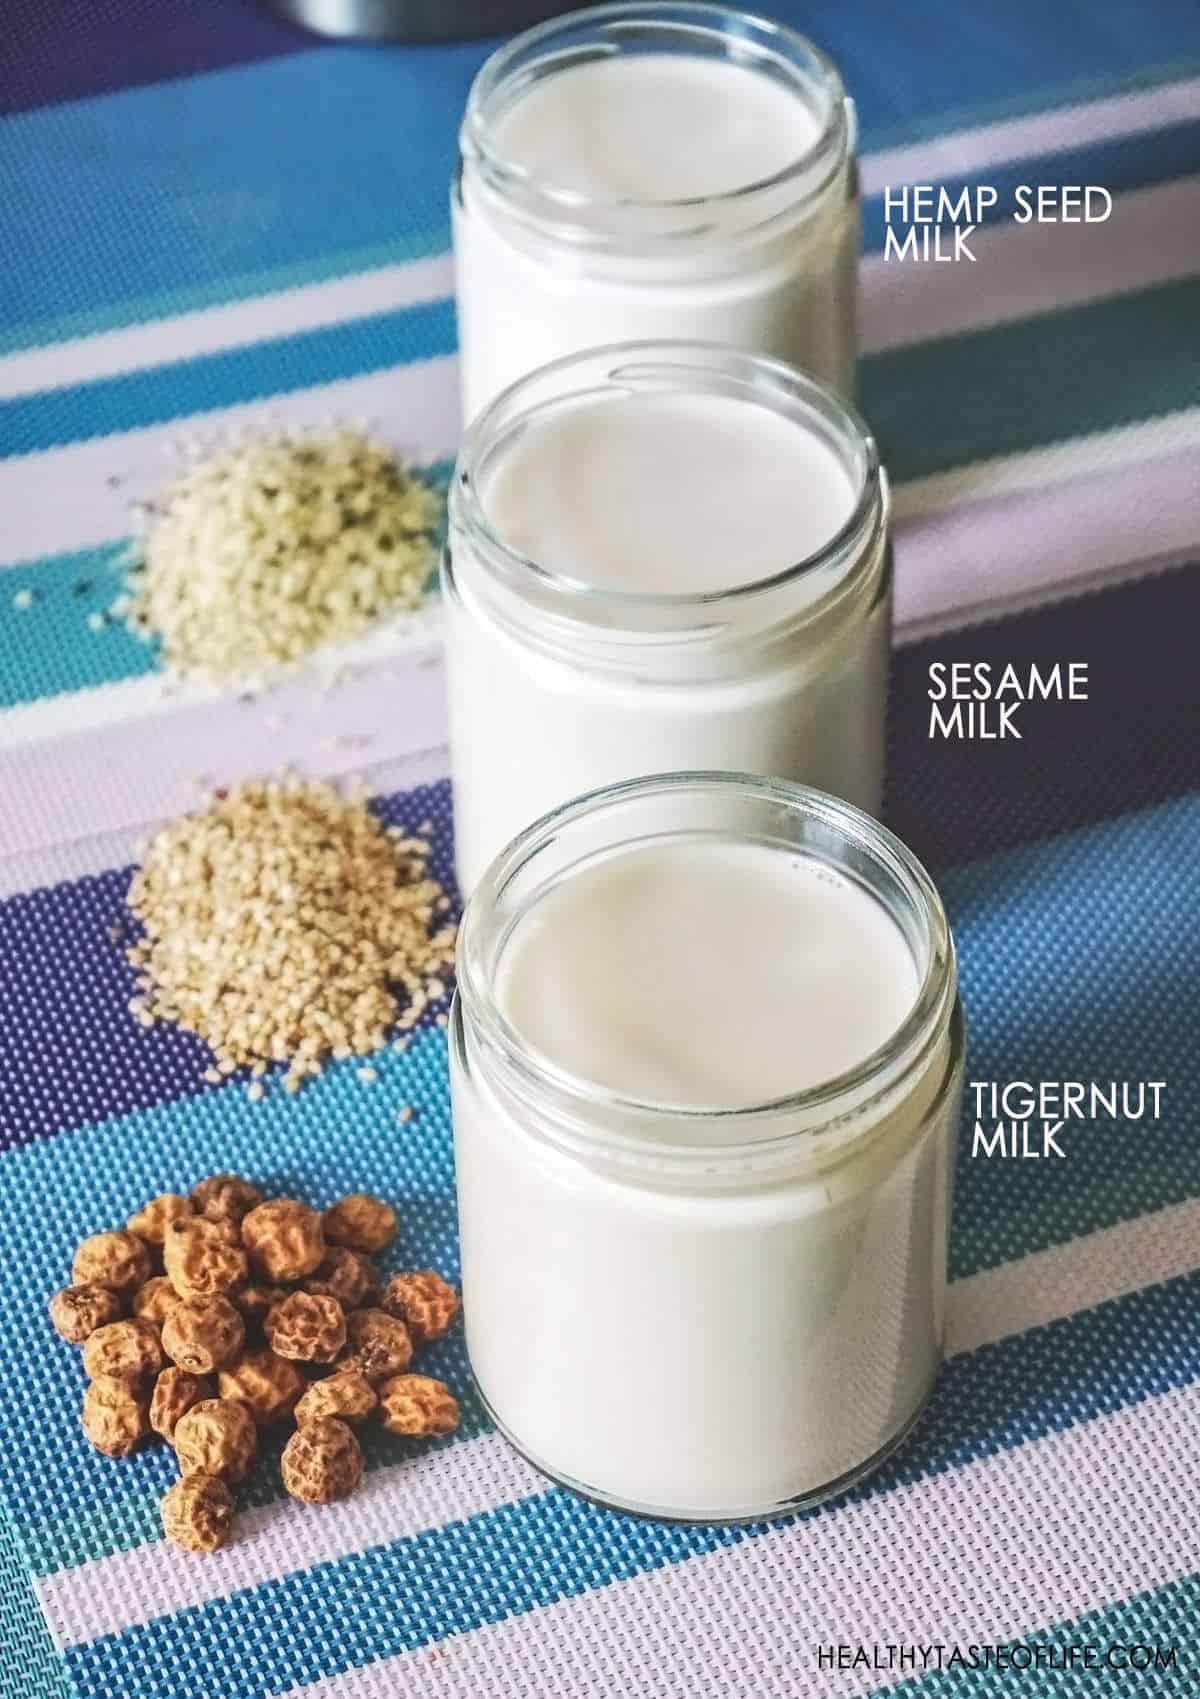 Non Dairy Milk Recipes Nut Free, Tigernut Milk, Sesame Milk, Hemp Milk